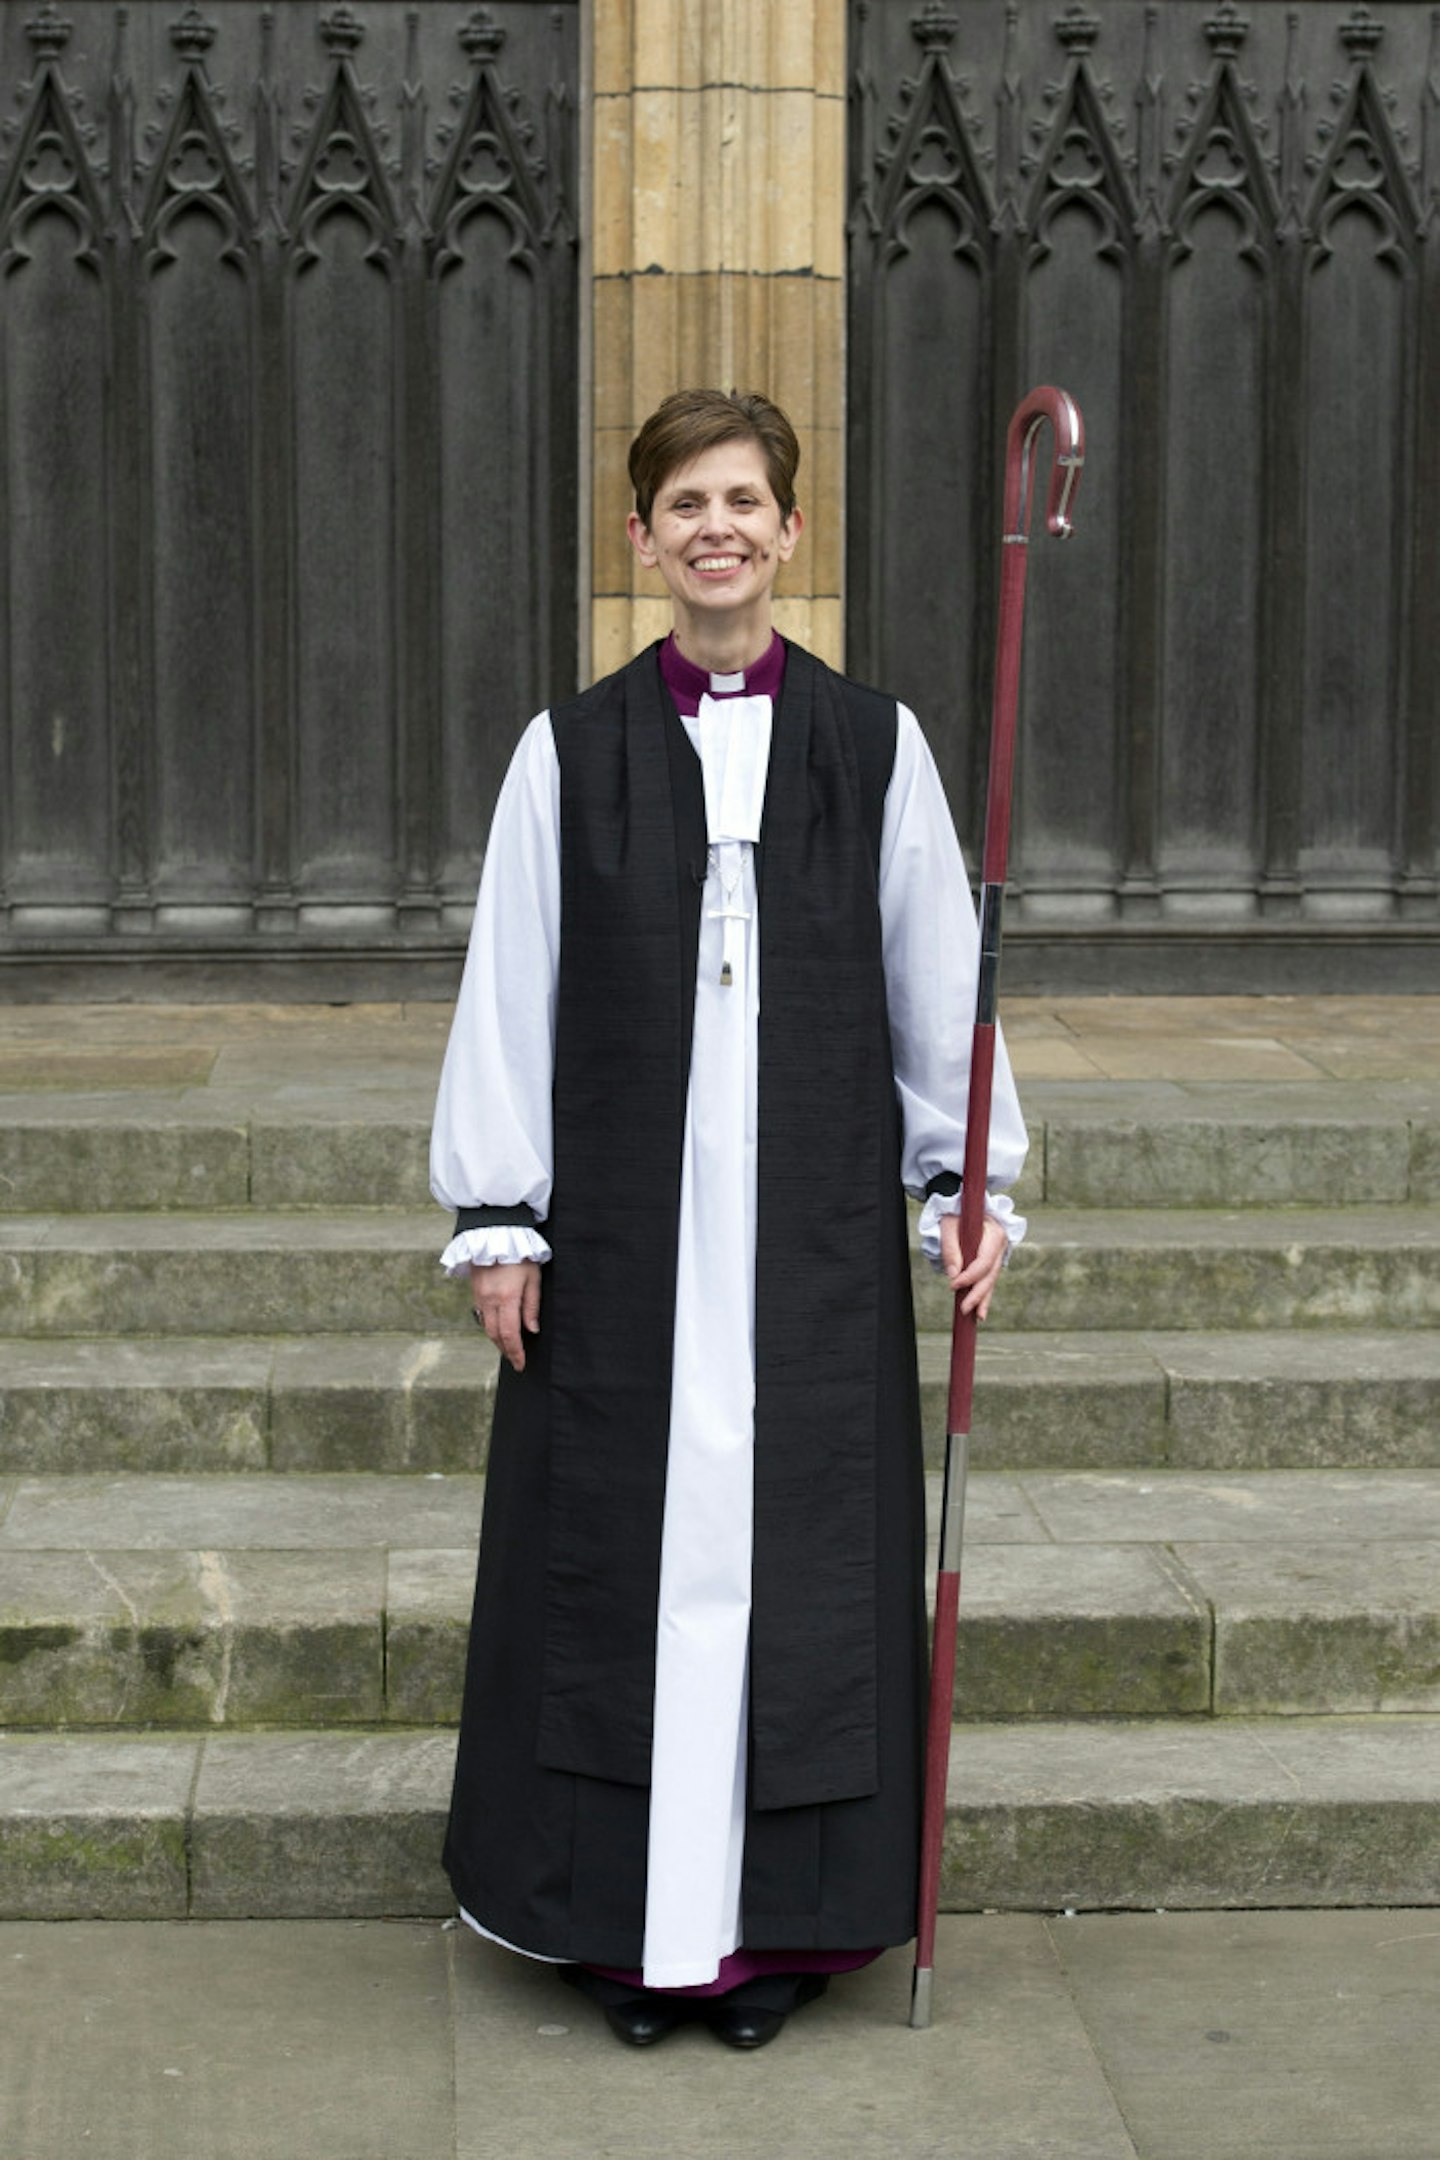 Rev Libby Lane